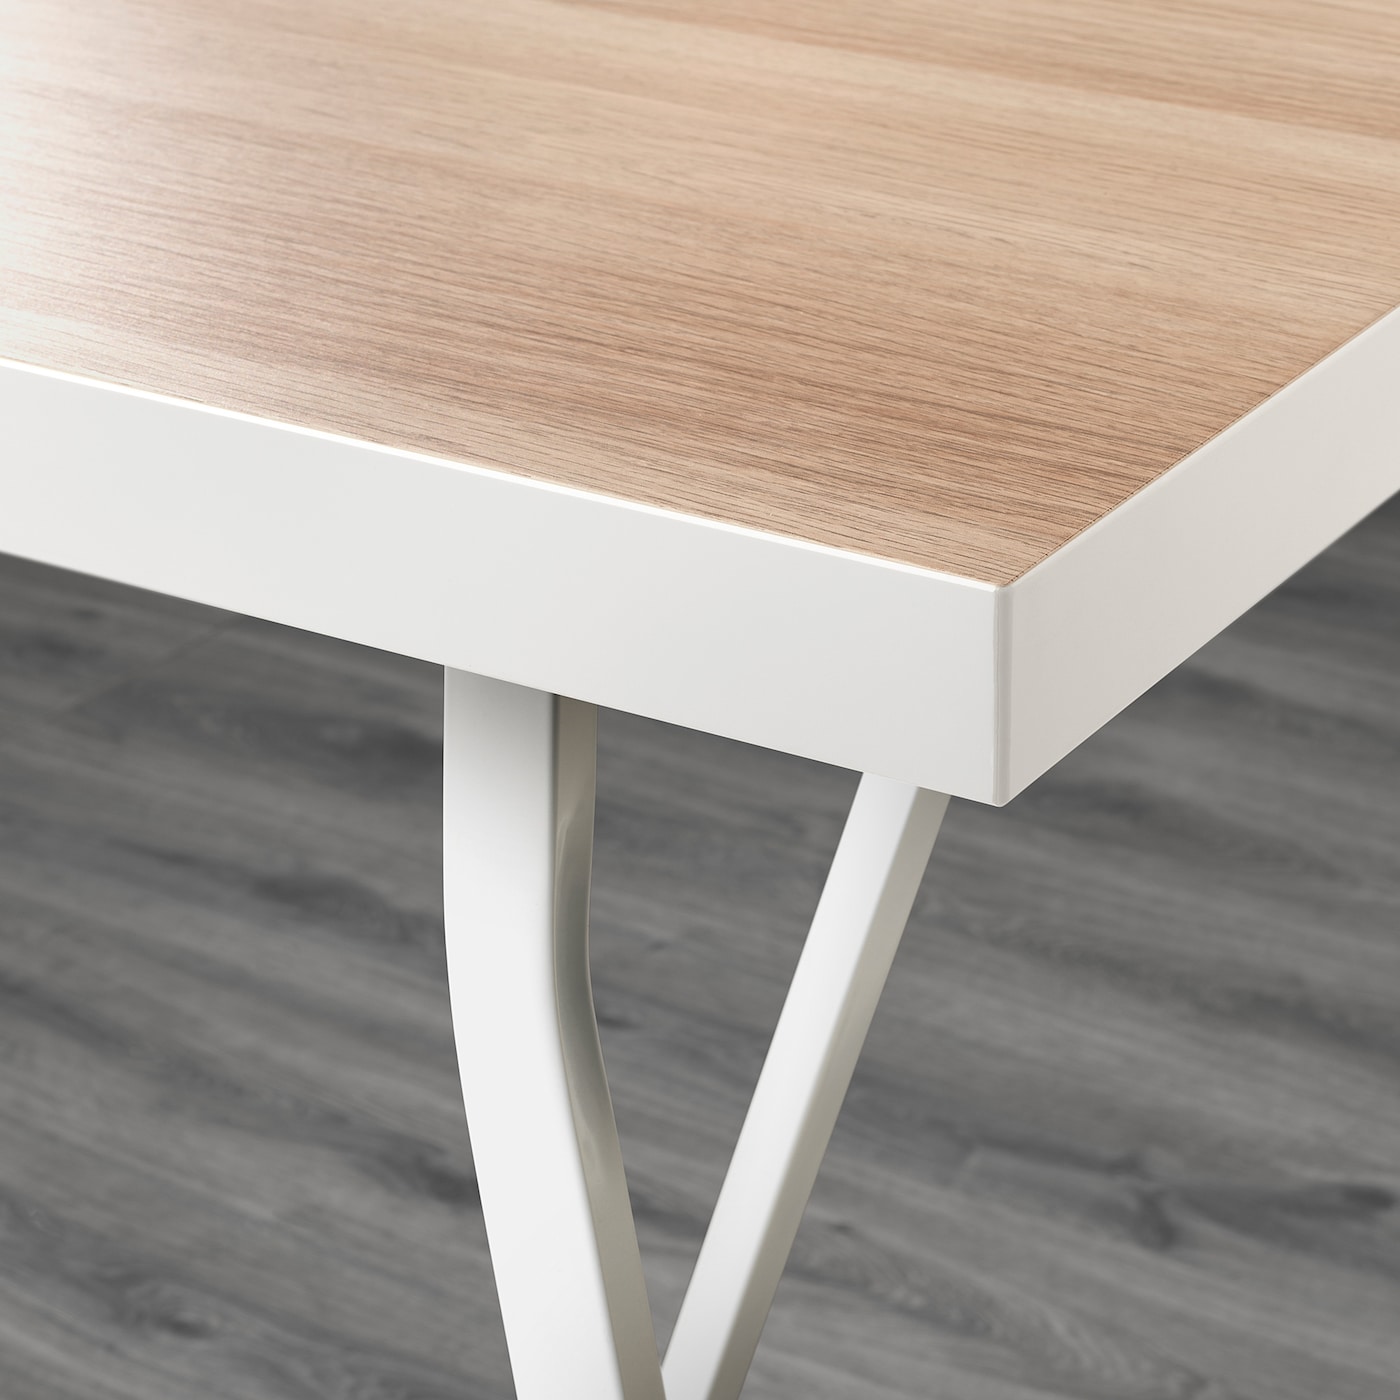 ЛИННМОН / Алекс стол, белый под беленый дуб, белый, 120x60 см